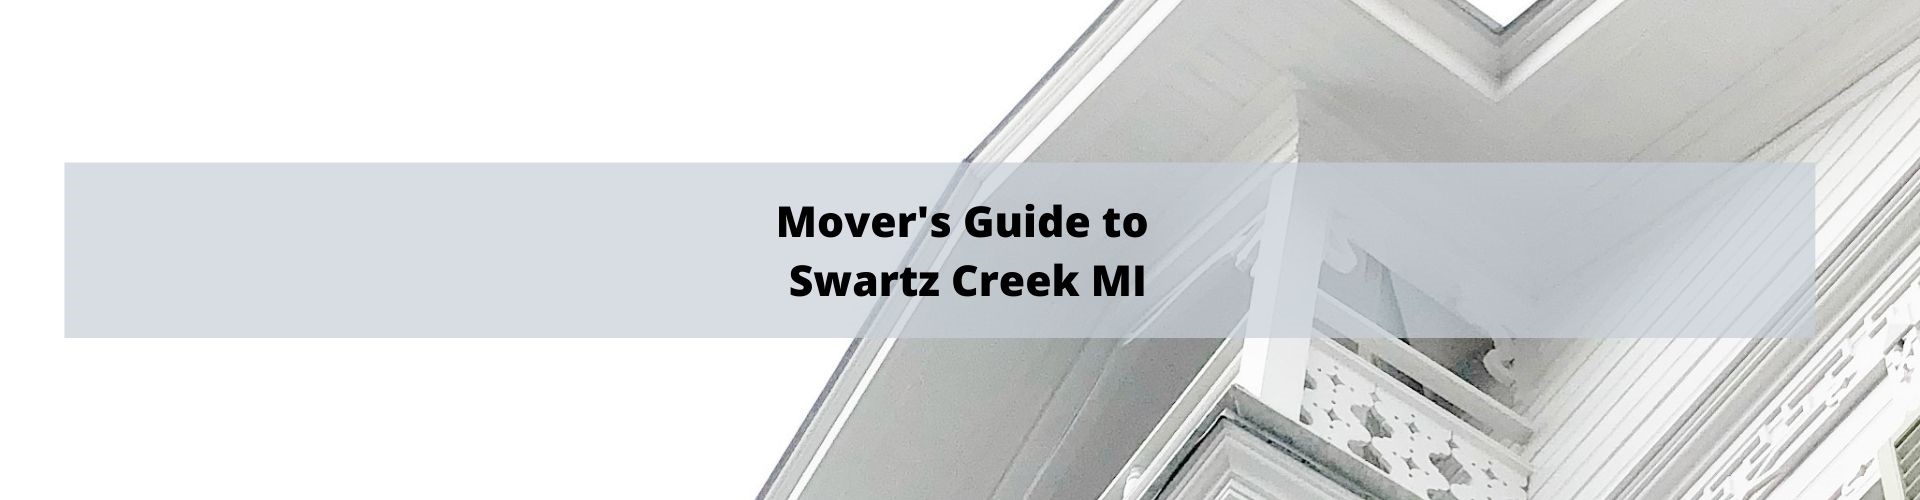 Movers Guide Swartz Creek MI